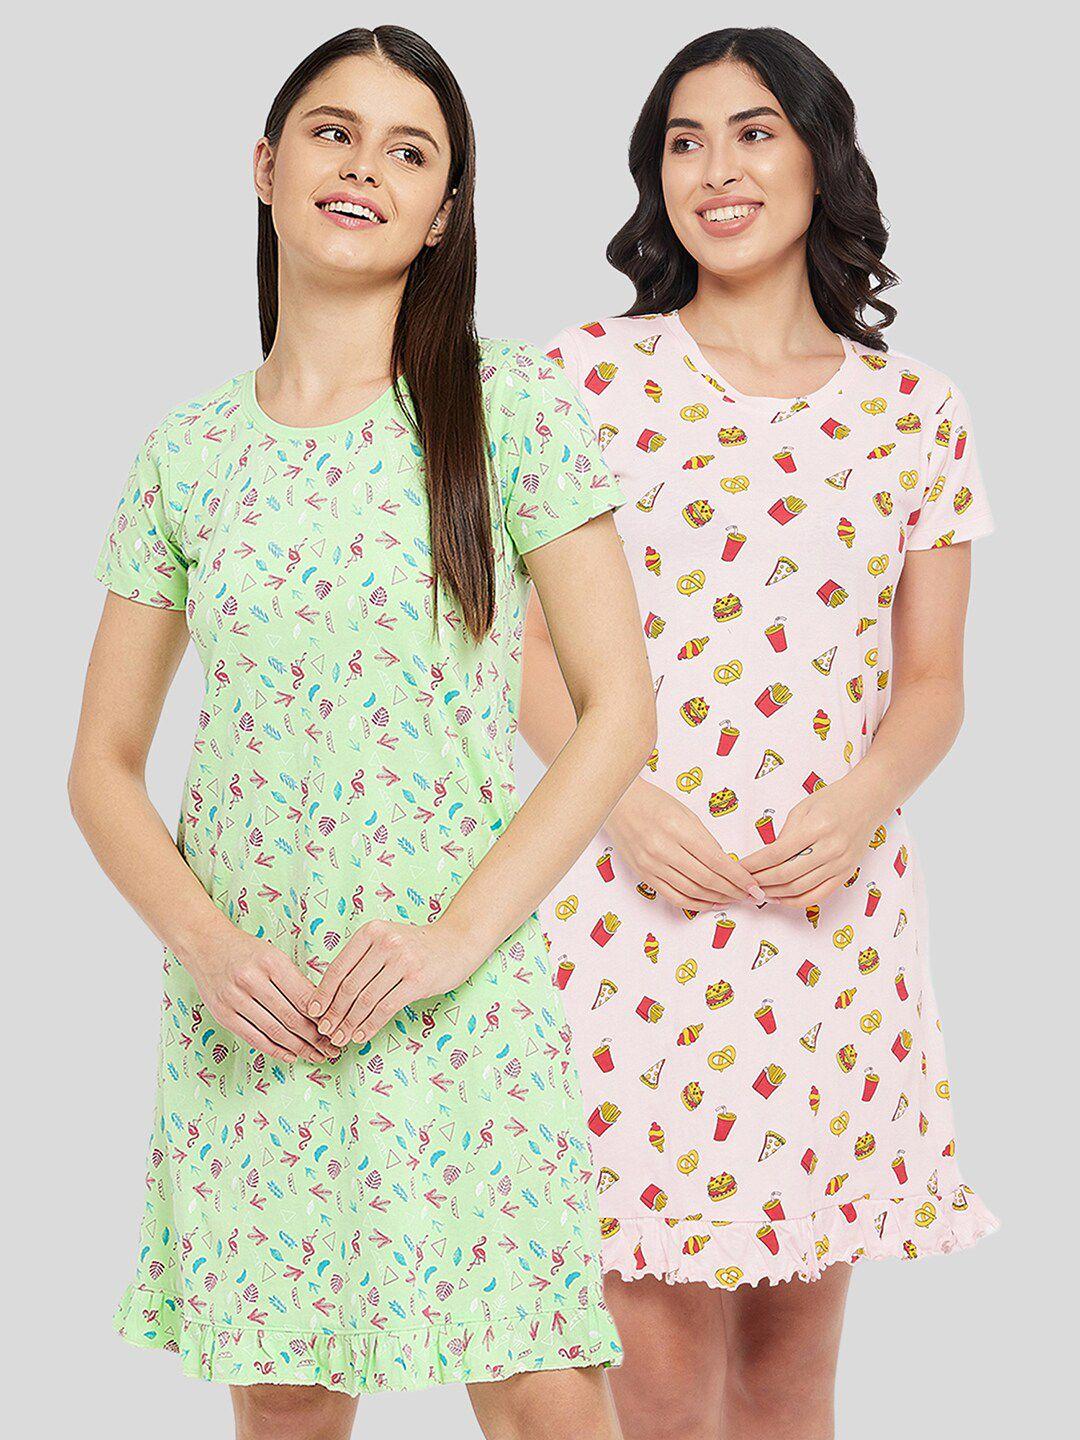 clovia women pack of 2 green printed cotton t-shirt nightdress